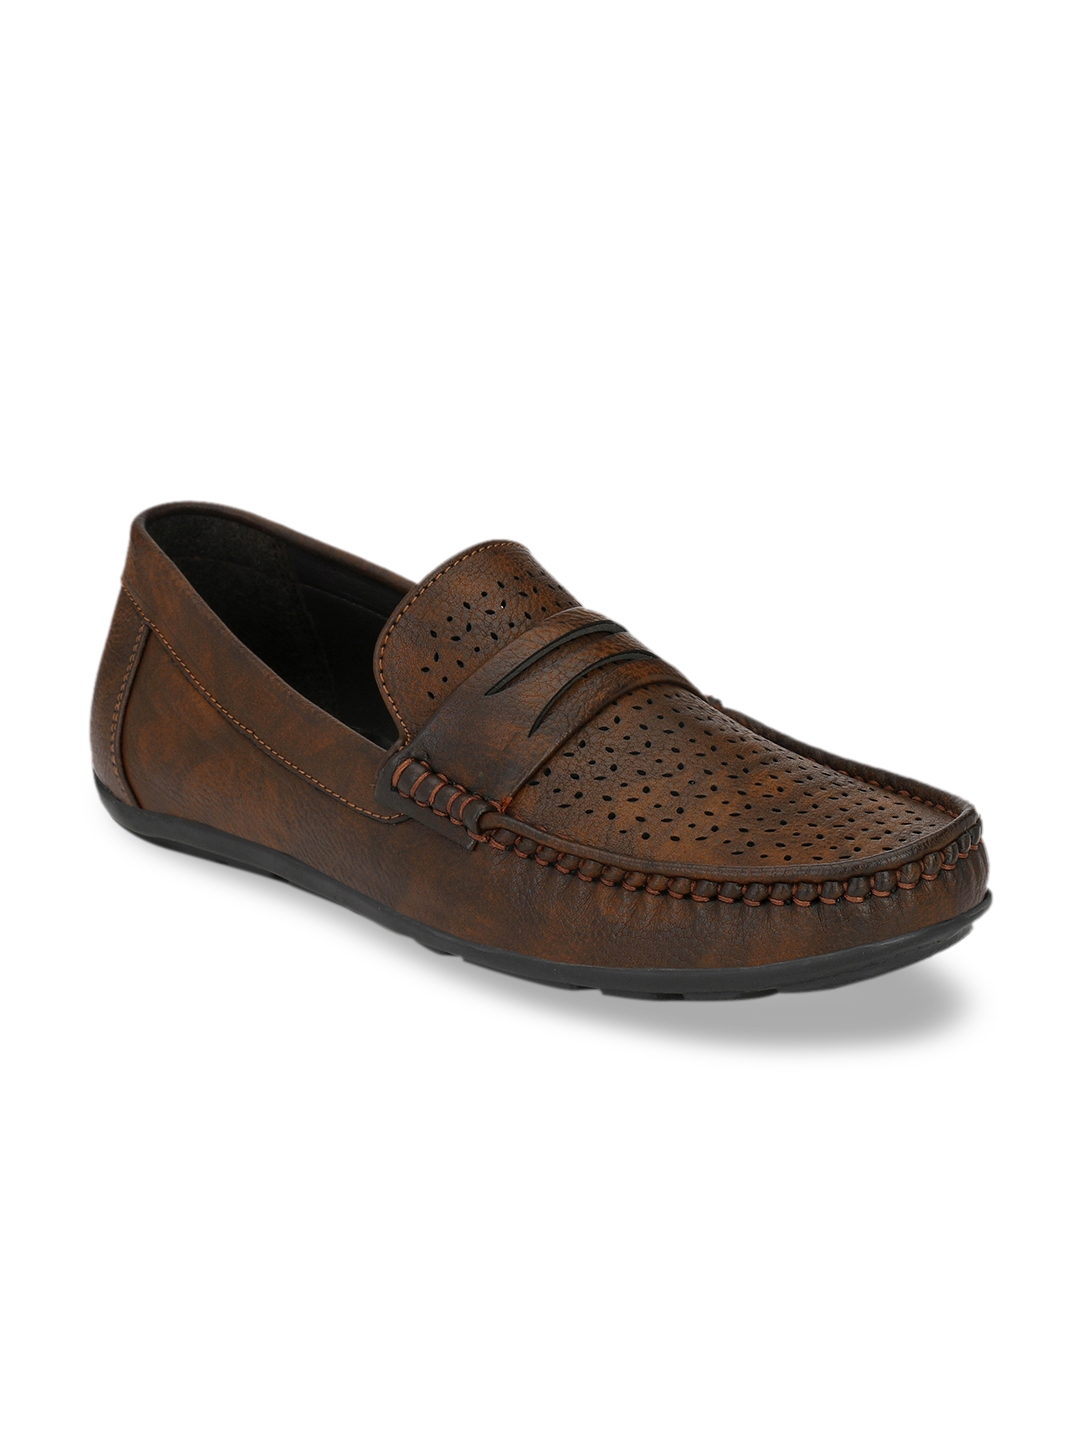 Buy El Paso Men Coffee Brown Loafers - Casual Shoes for Men 10634048 ...